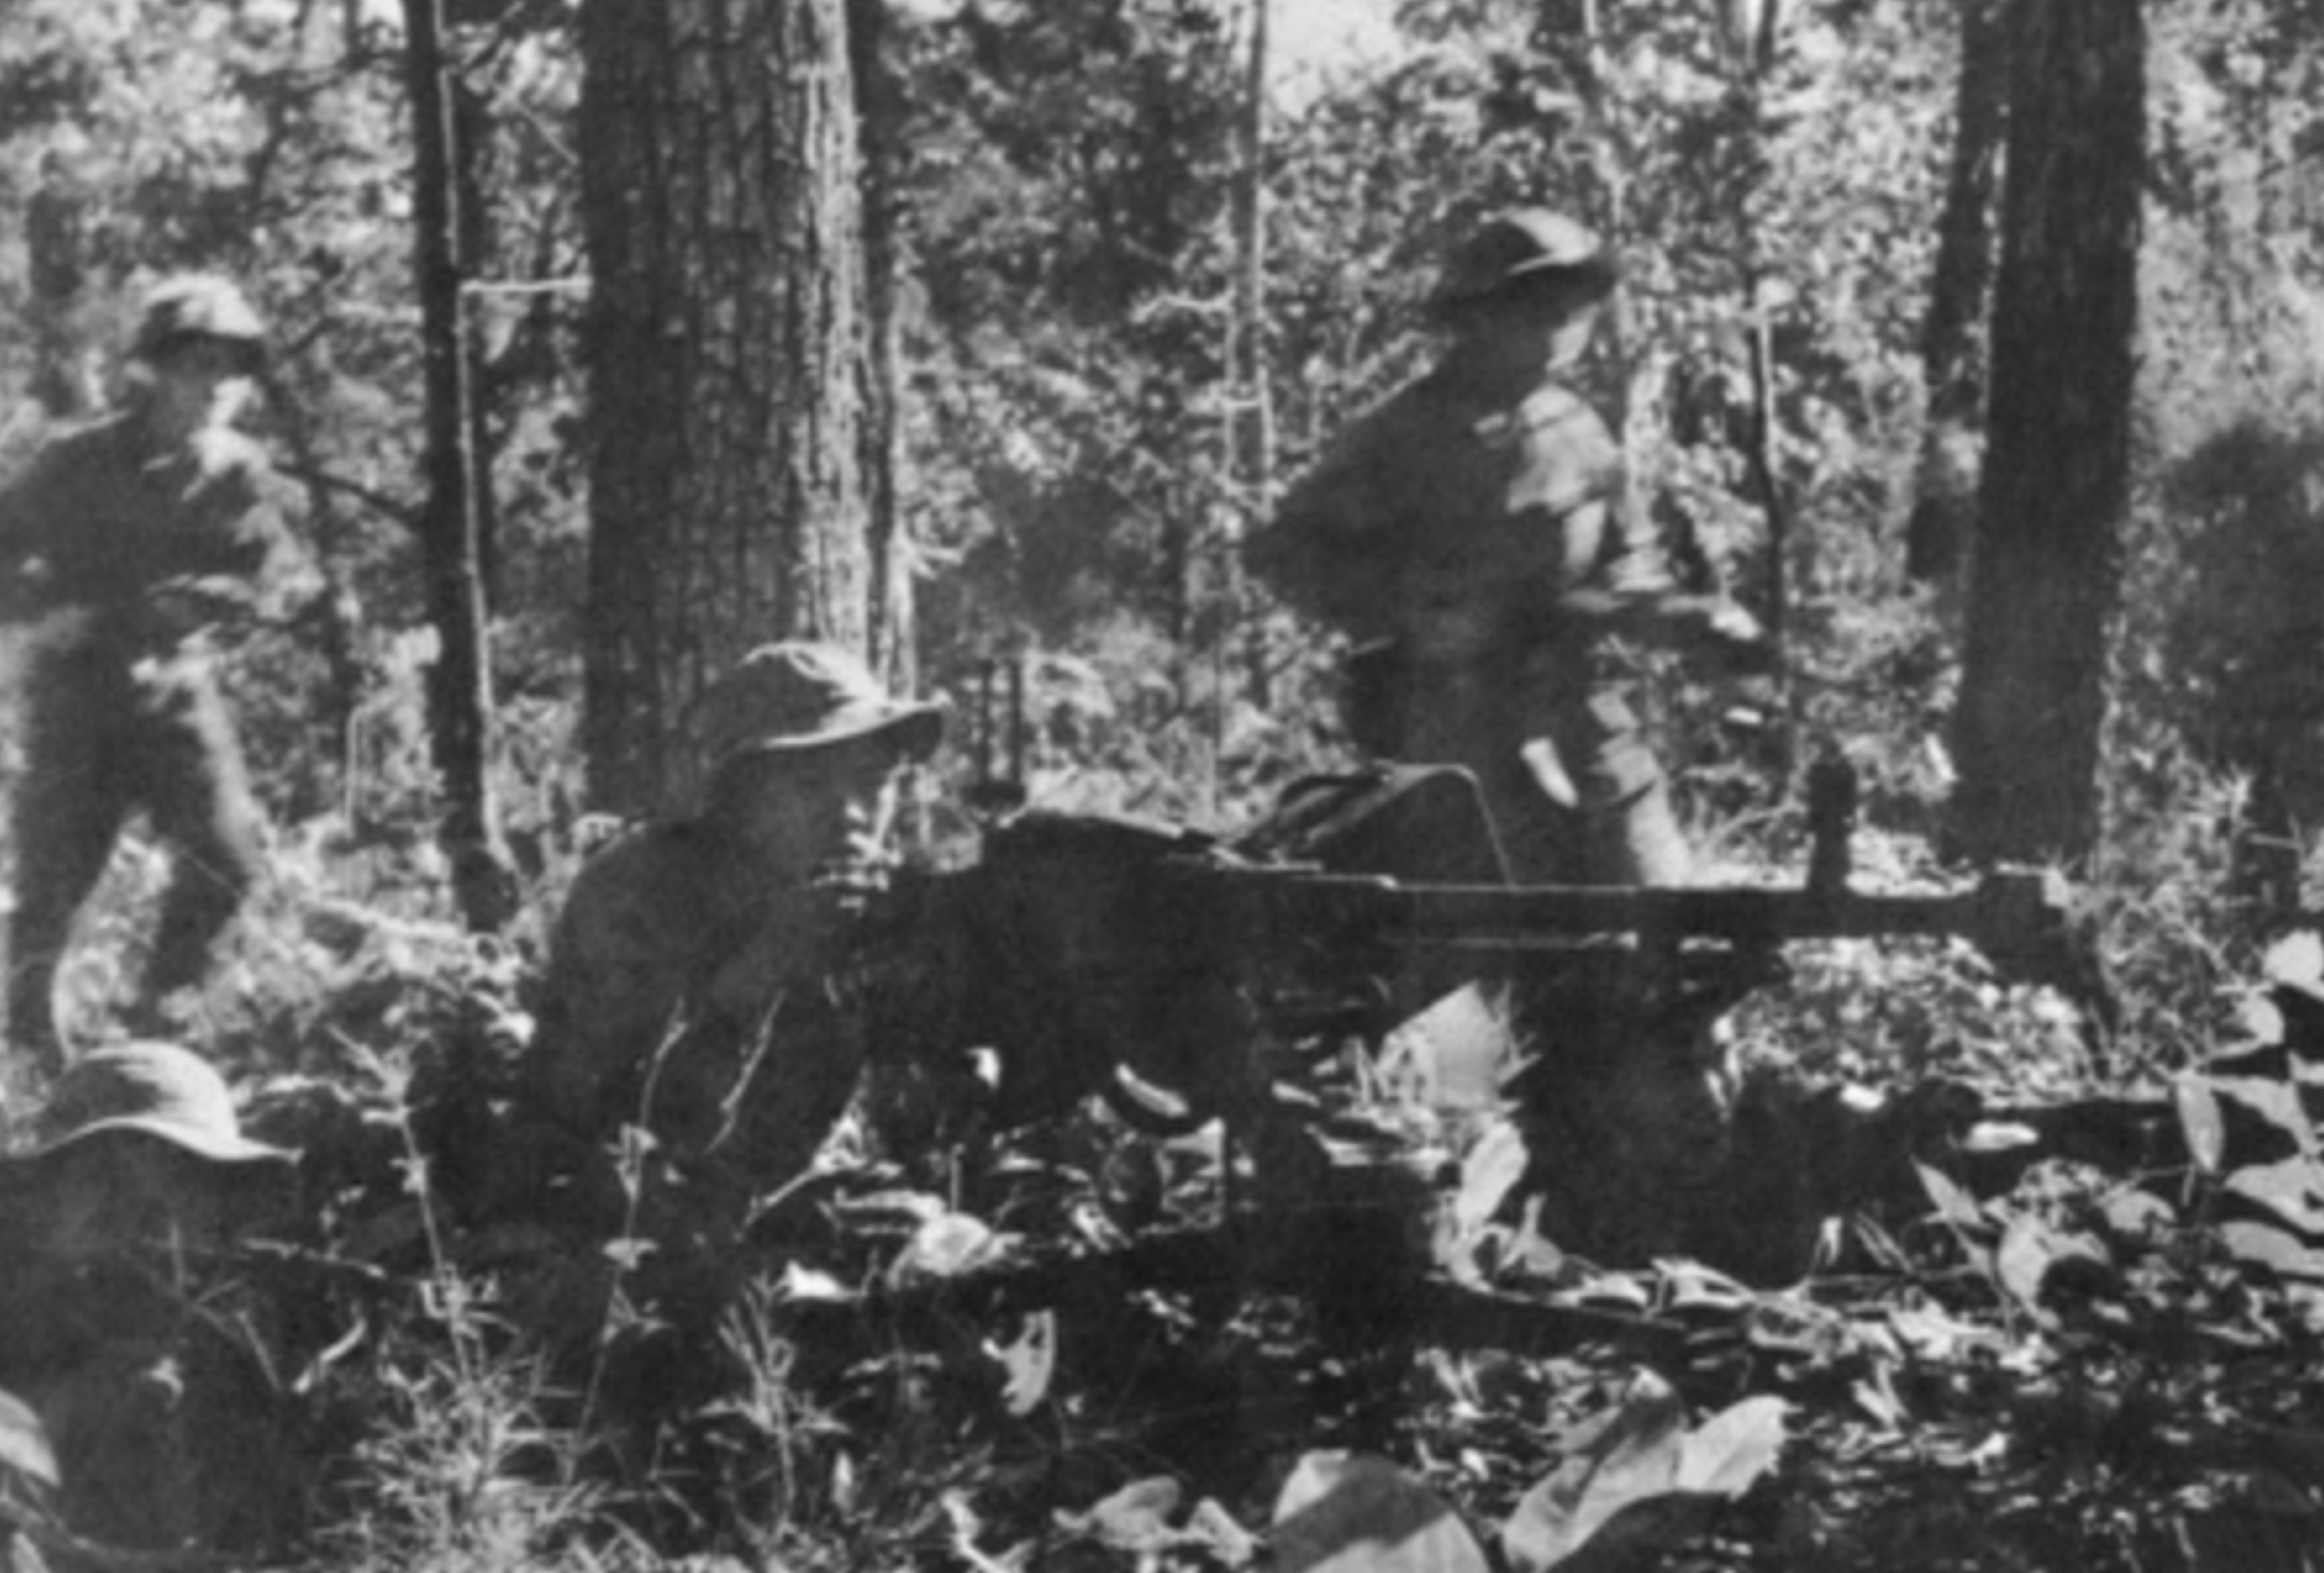 machine gun being operated by Vietnamese troops